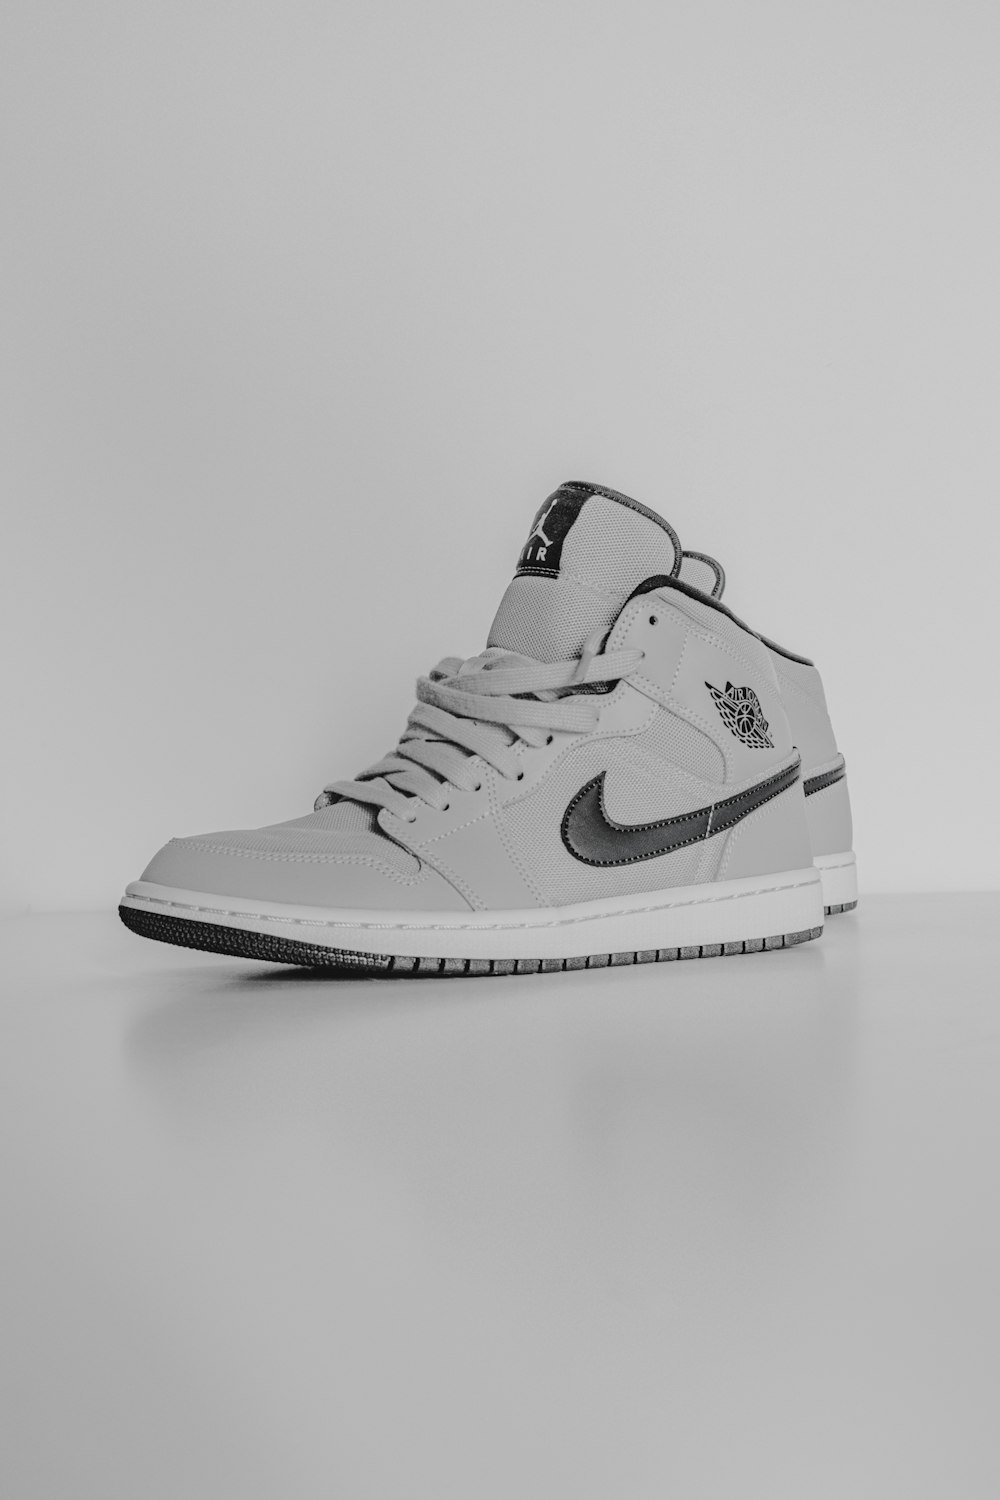 Nike Air Jordan 1 blanco y negro